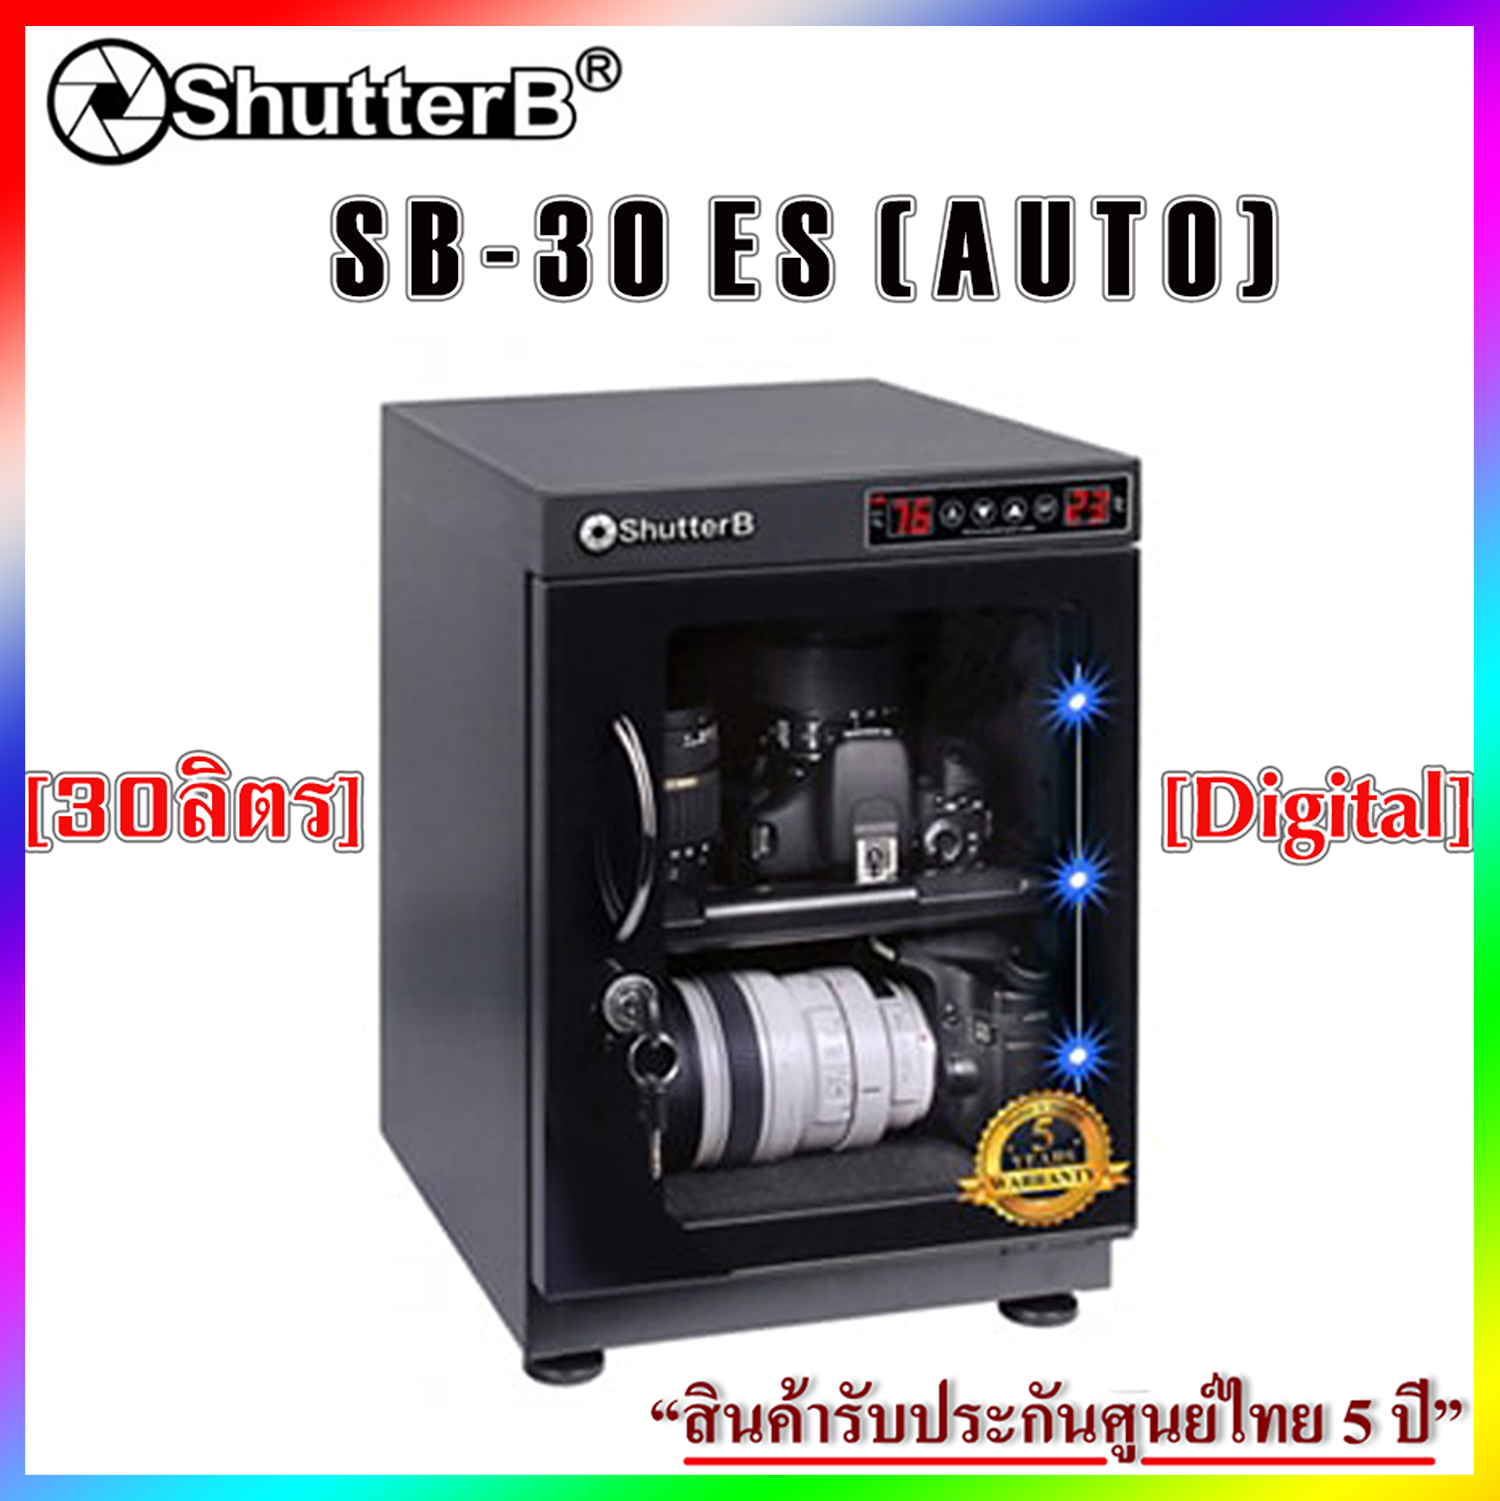 Shutter B DRY CABINET ตู้กันชื้น รุ่น SB-30ES (Digital) สินค้ารับประกันศูนย์ไทย 5 ปี